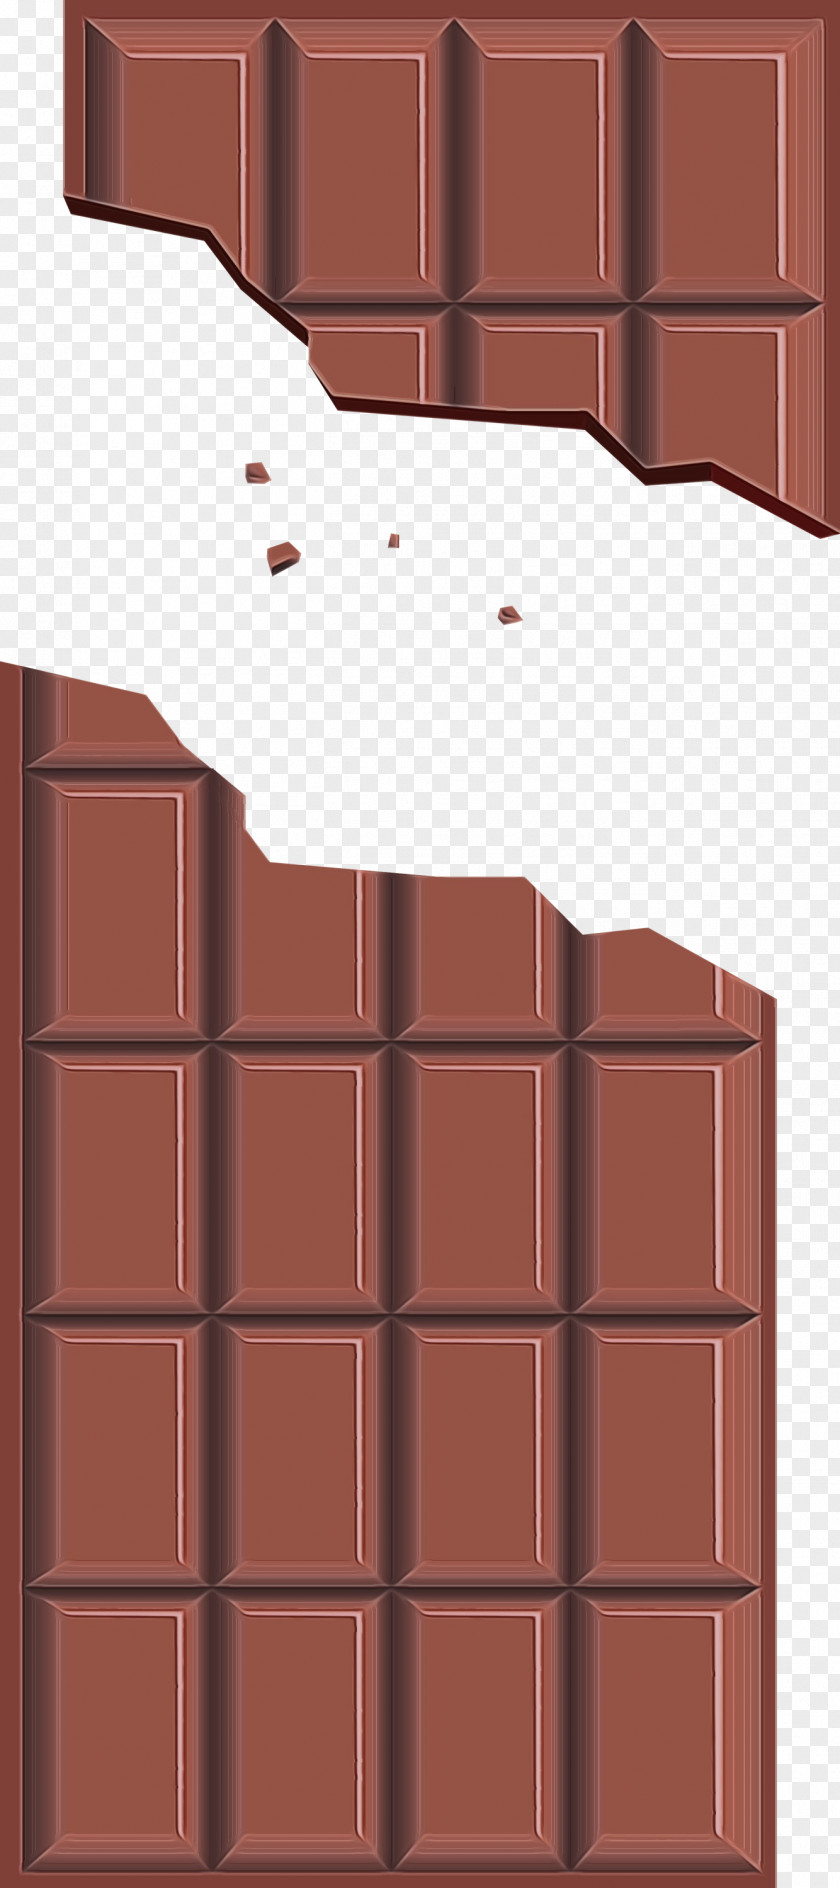 Chocolate Bar PNG